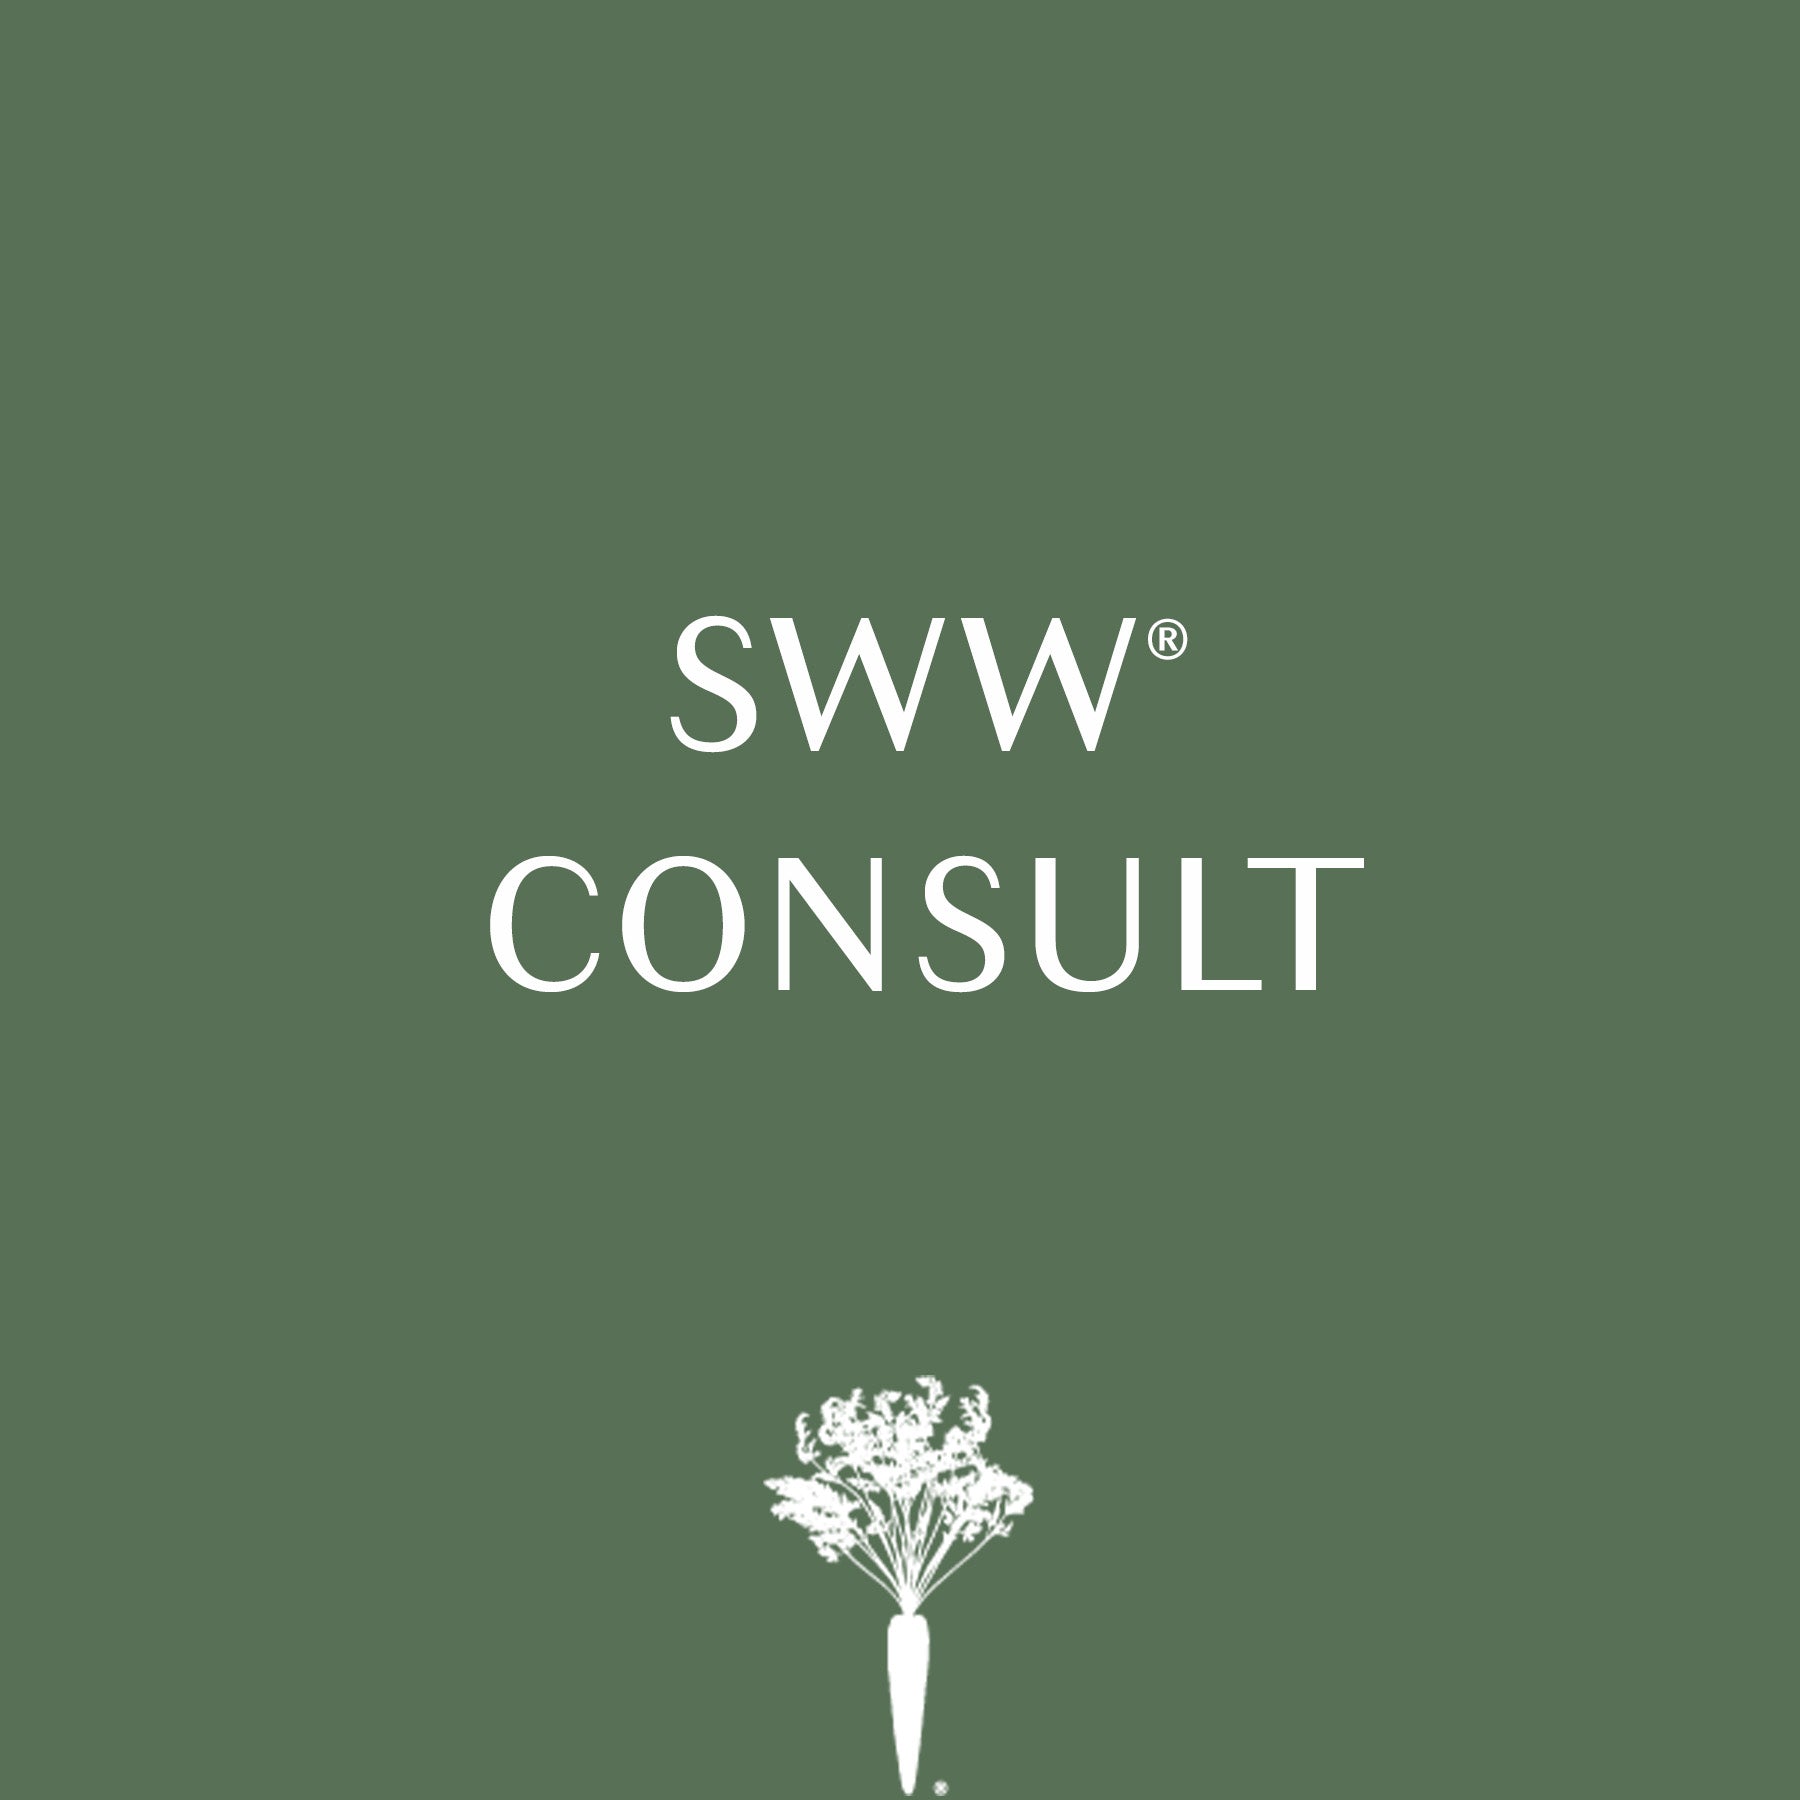 SWW® Consult